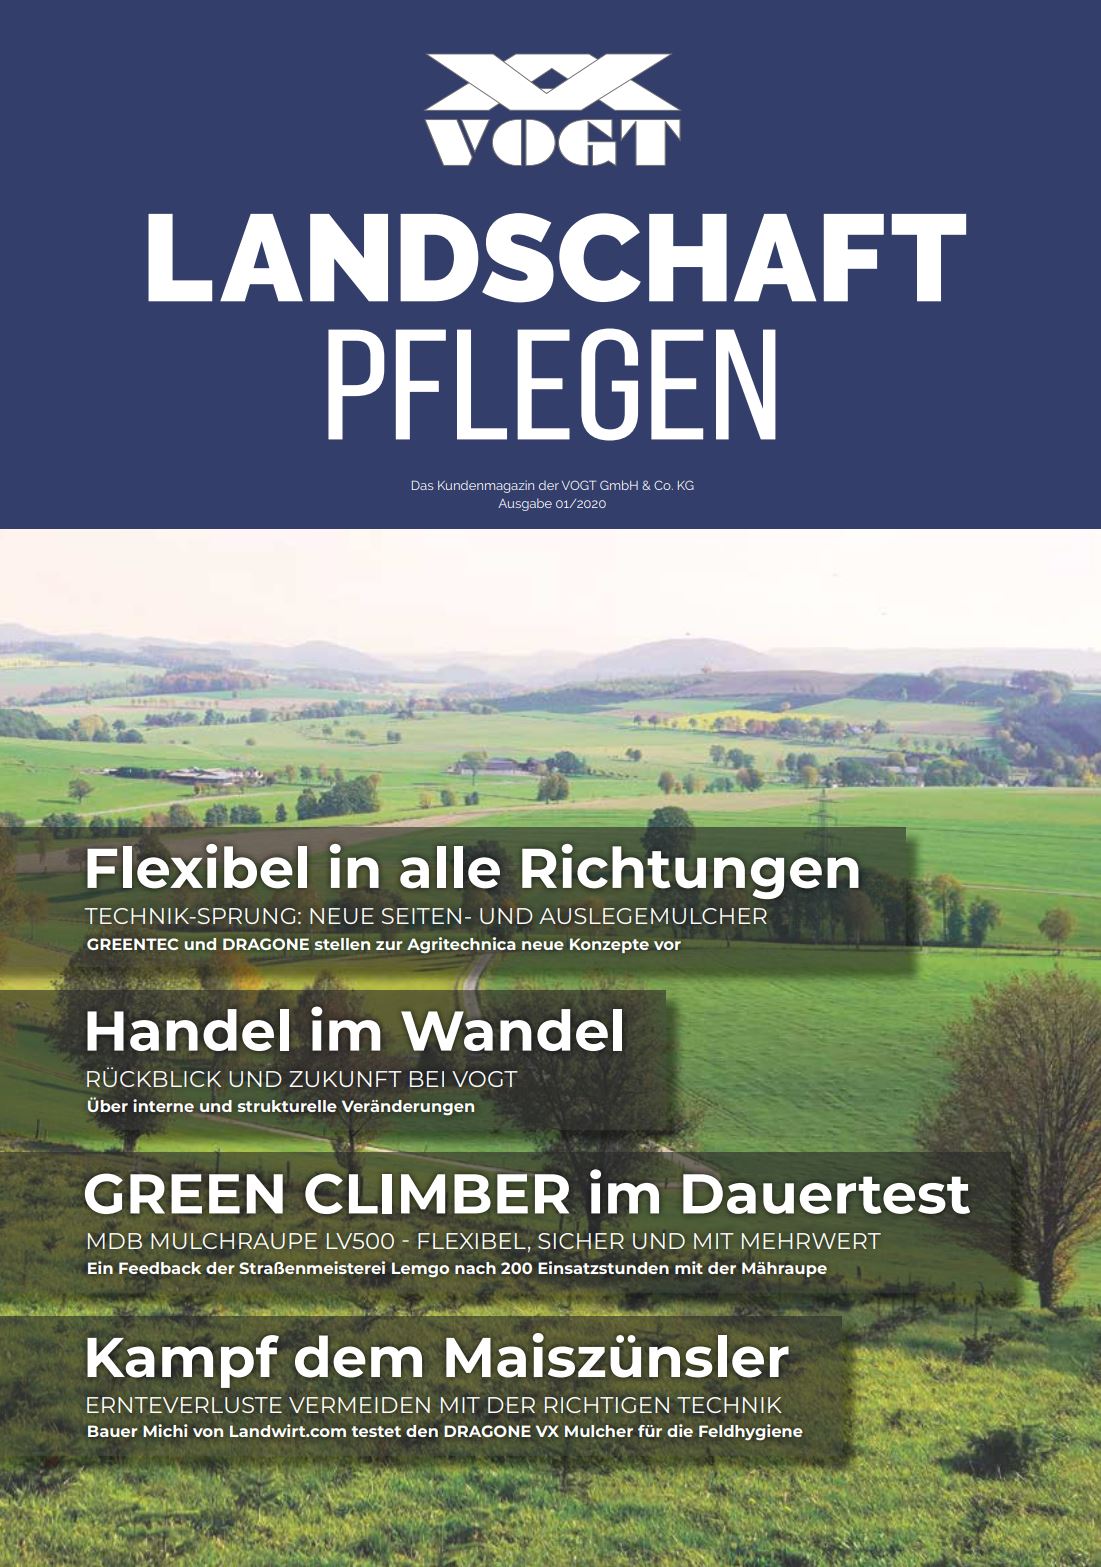 VOGT Magazin - Landschaft pflegen 2020